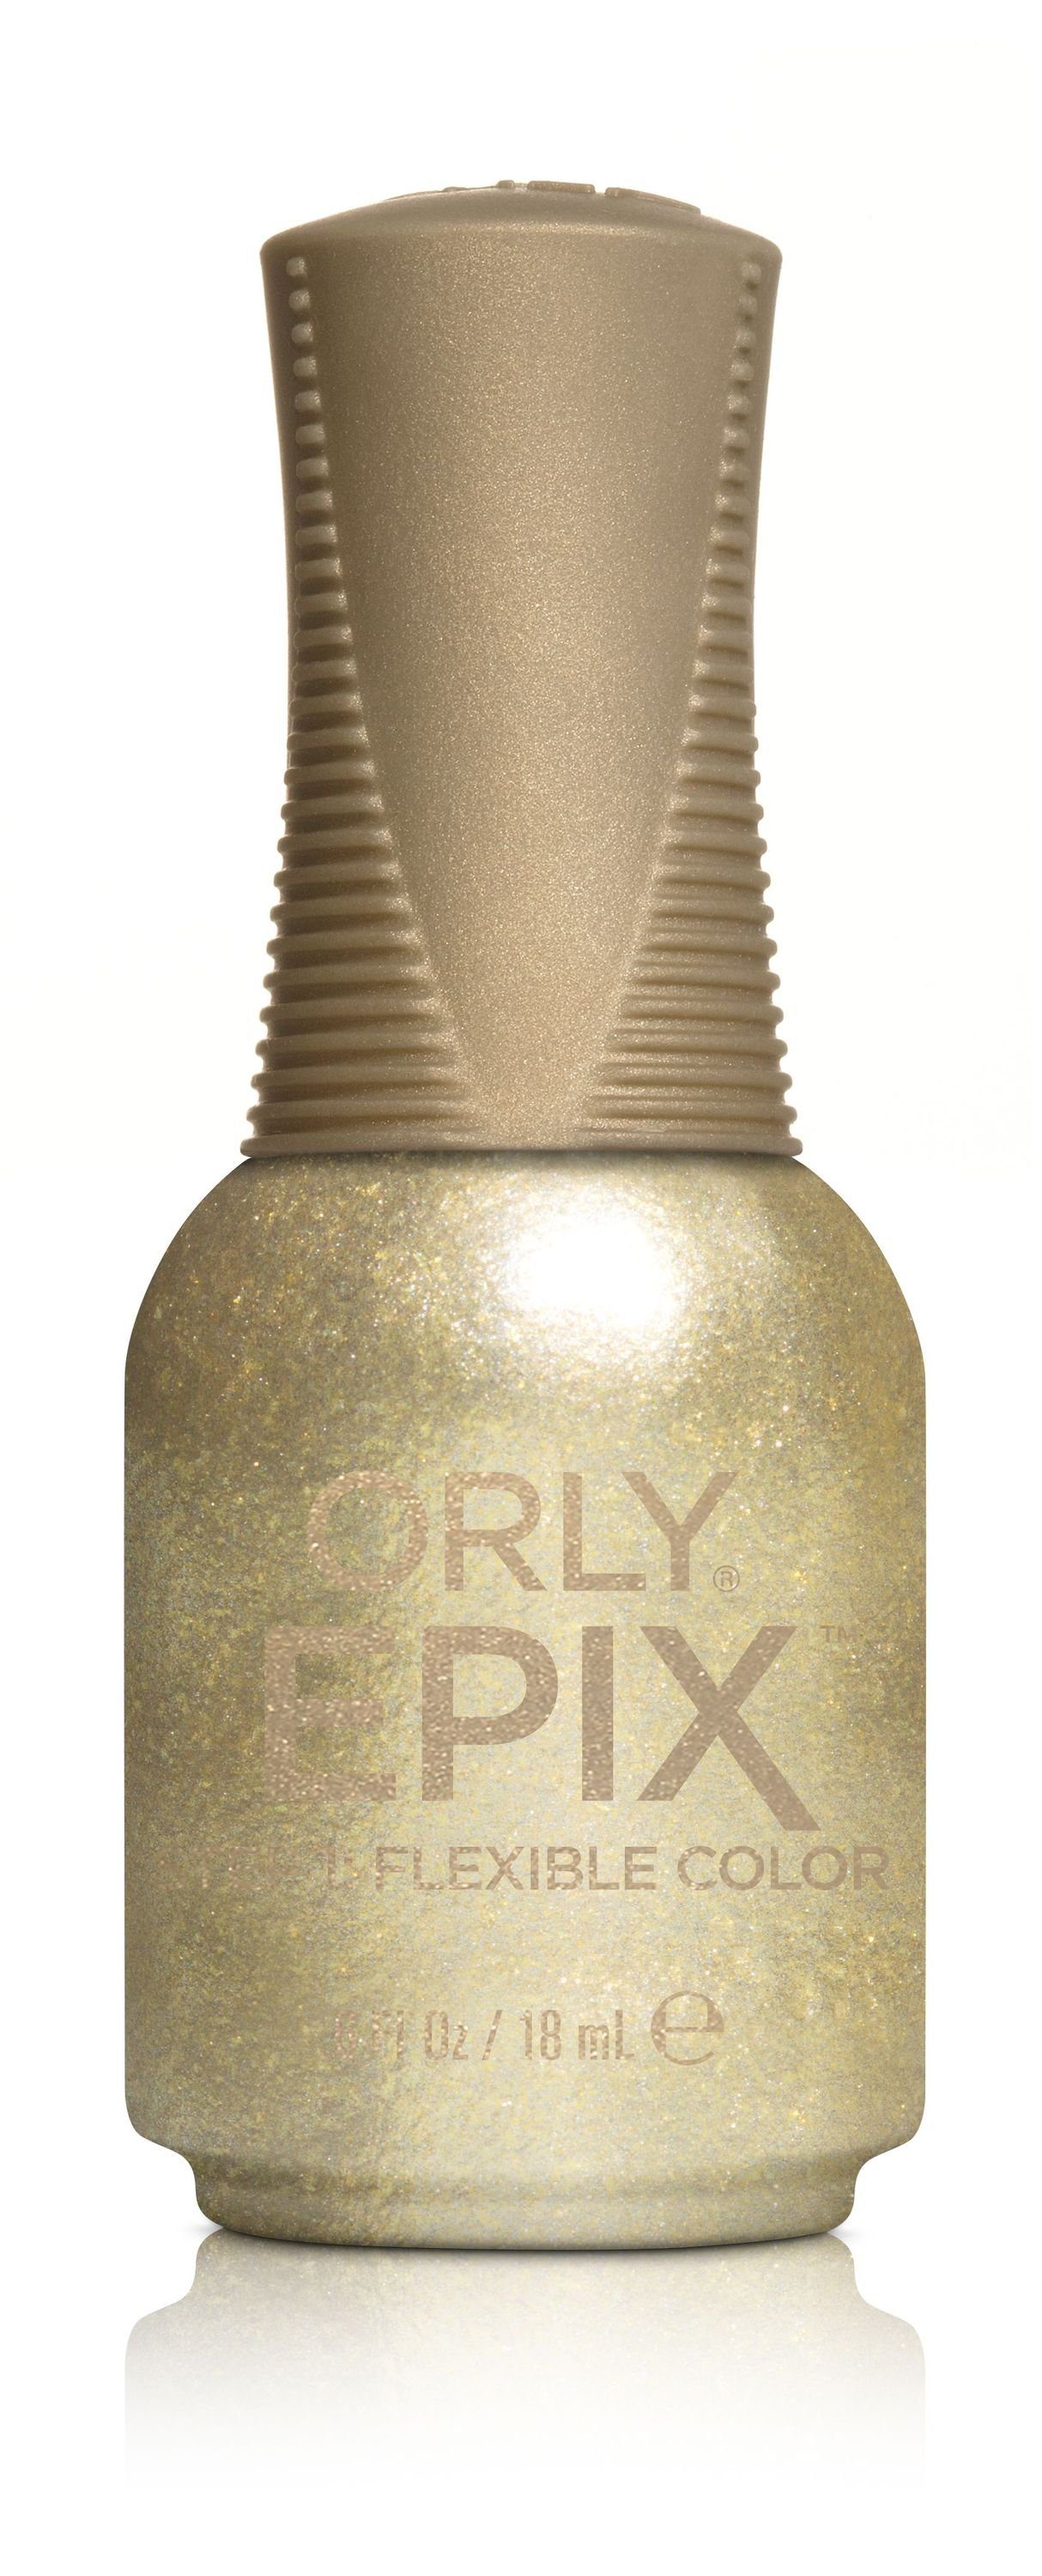 ORLY Nagellack ORLY - EPIX ML 18 Tinseltown, Flexible Color 